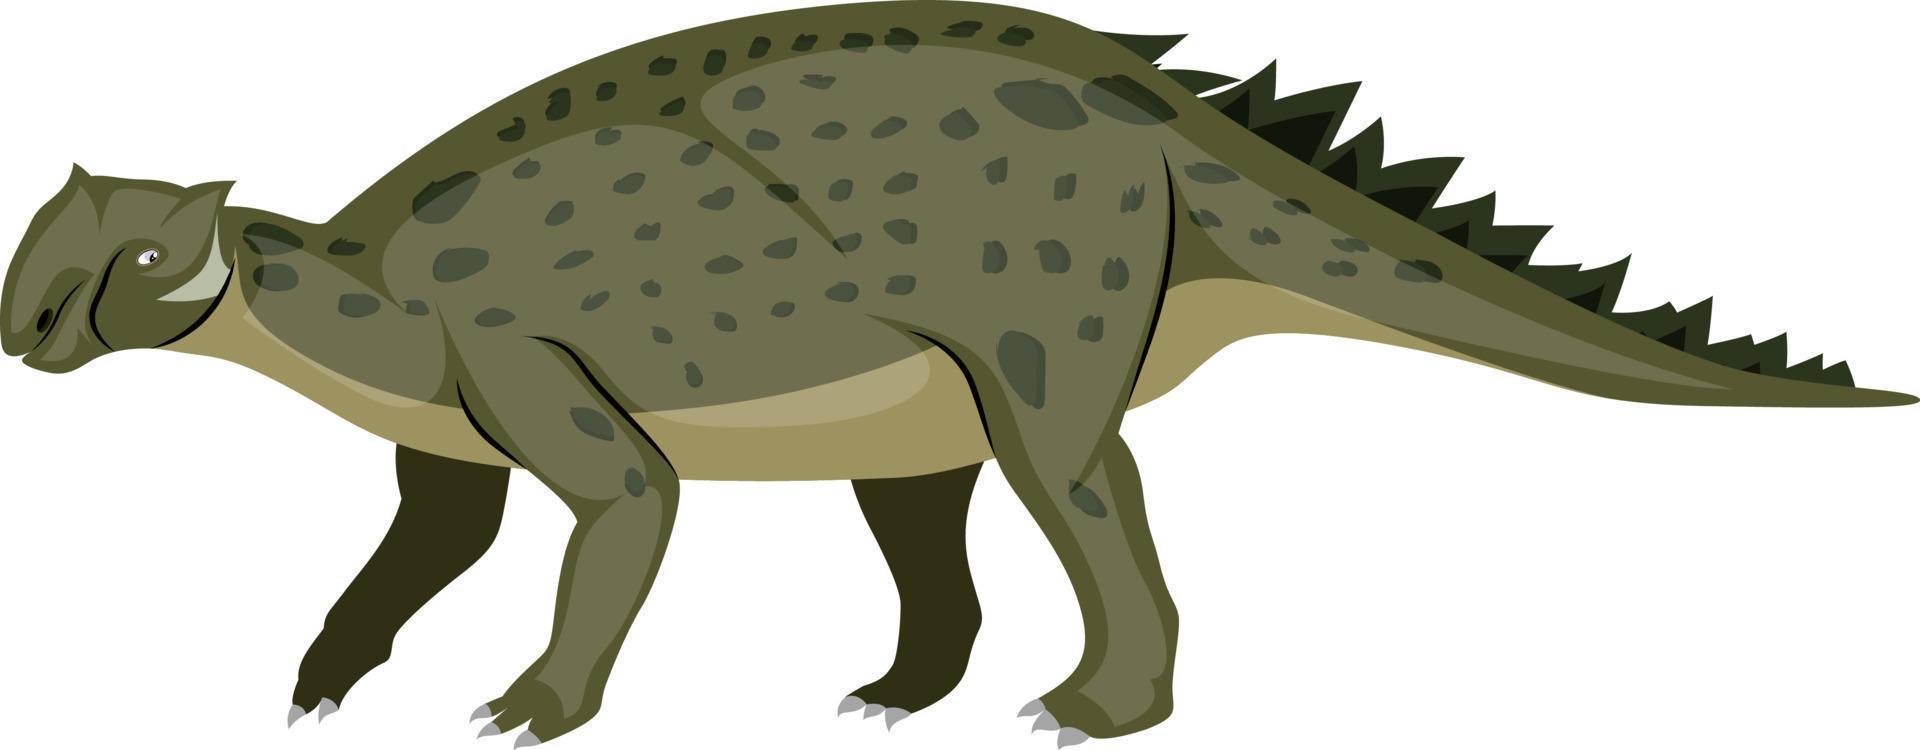 Minmi dinosour, illustration, vector on white background.